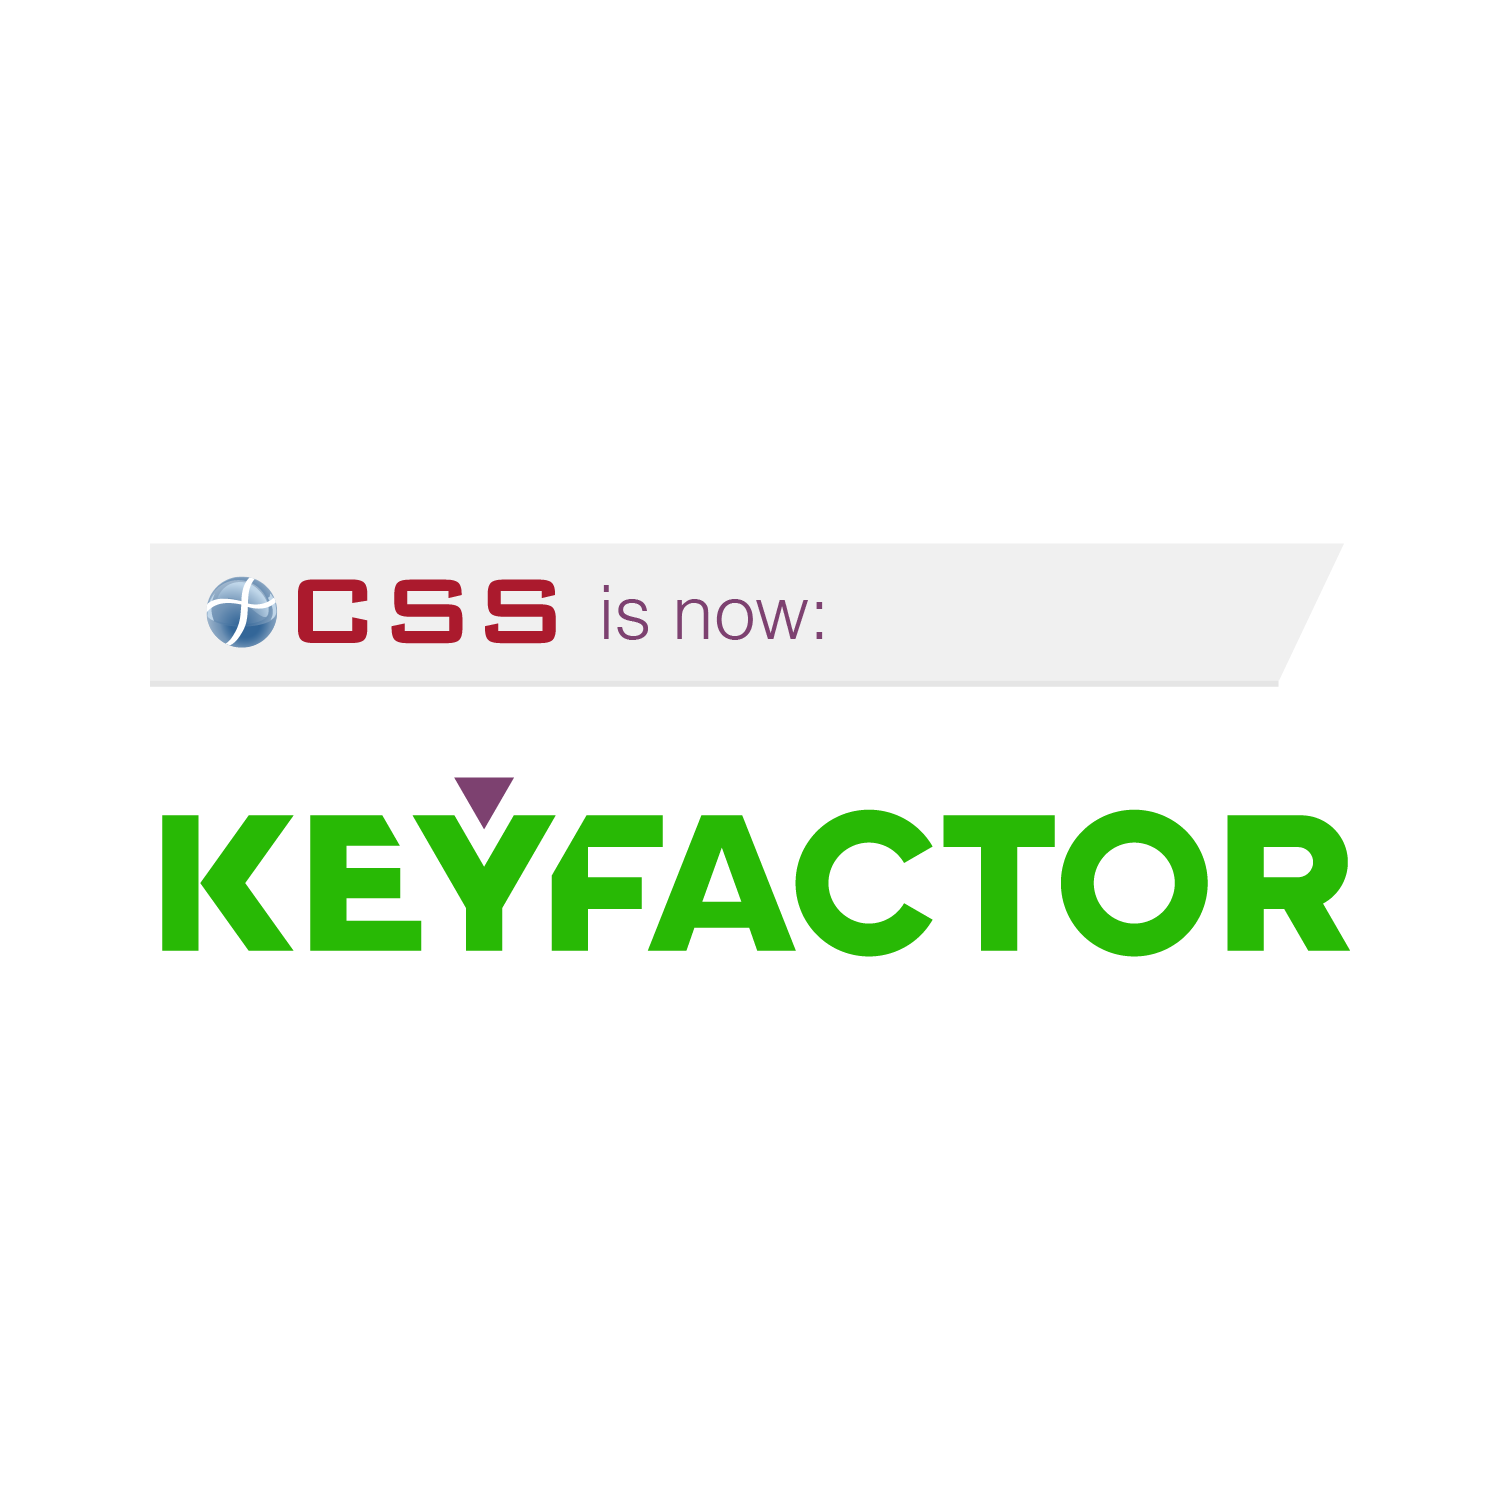 CSS is Now Keyfactor